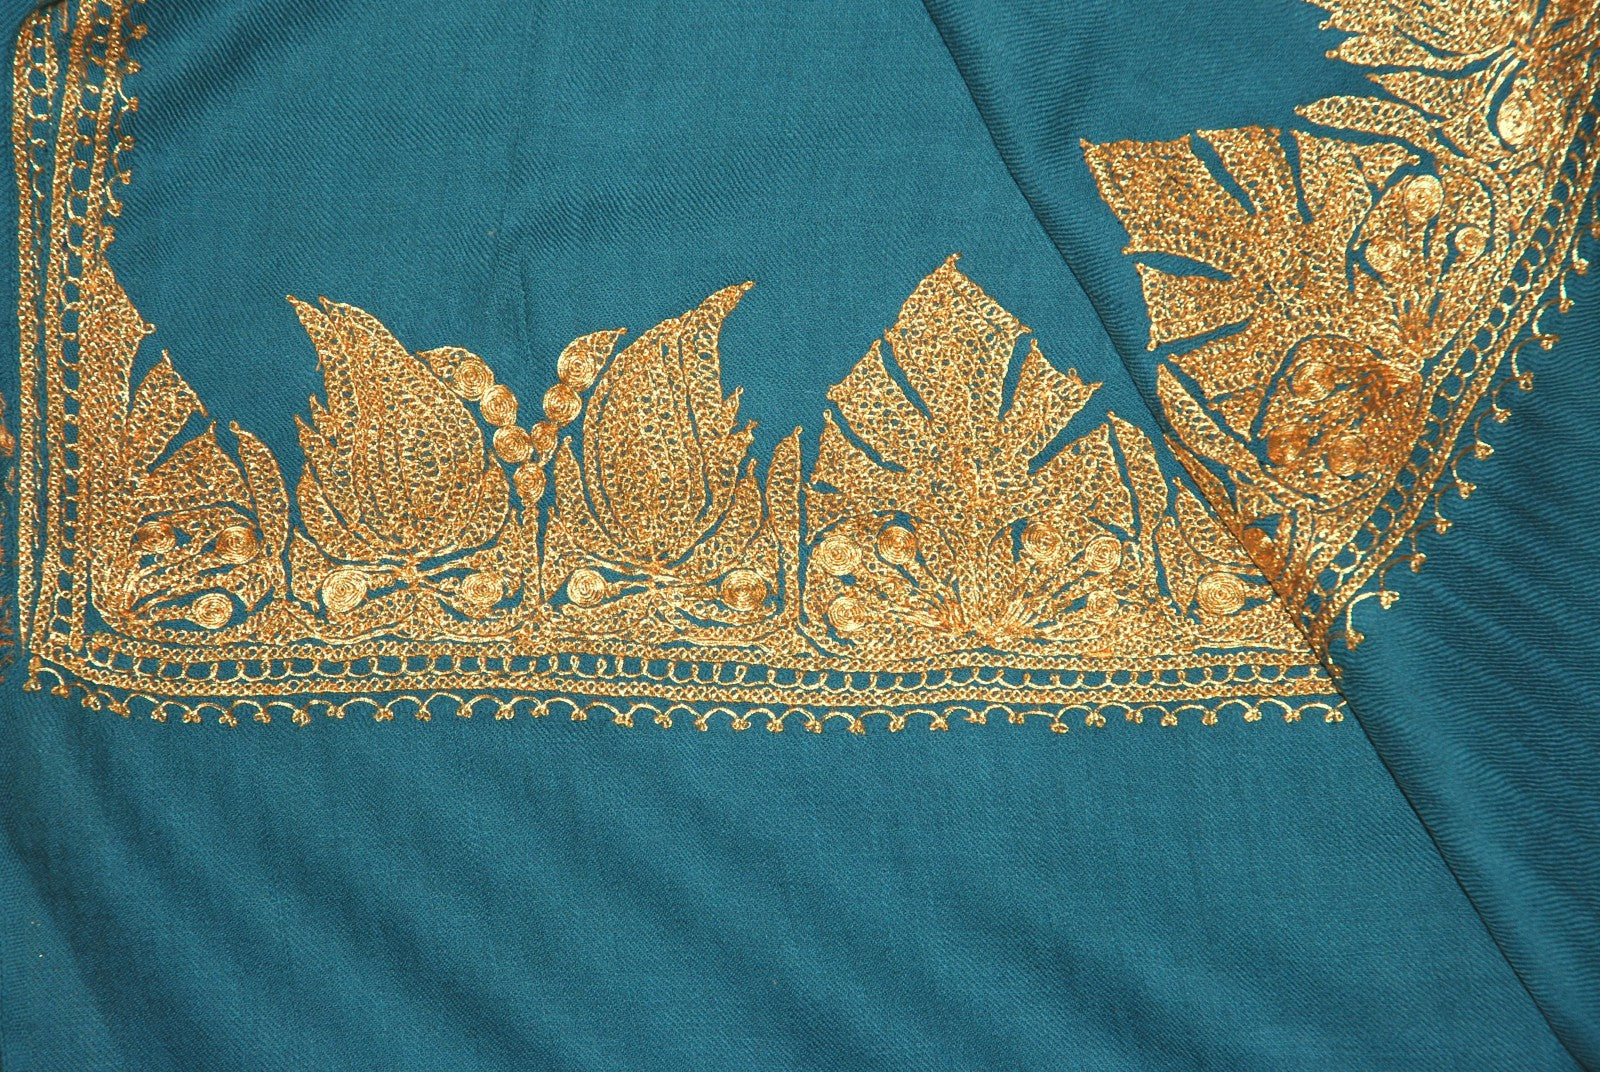 Embroidered Wool Shawl Sea Green, Gold "Tilla" Sozni Embroidery #WS-902